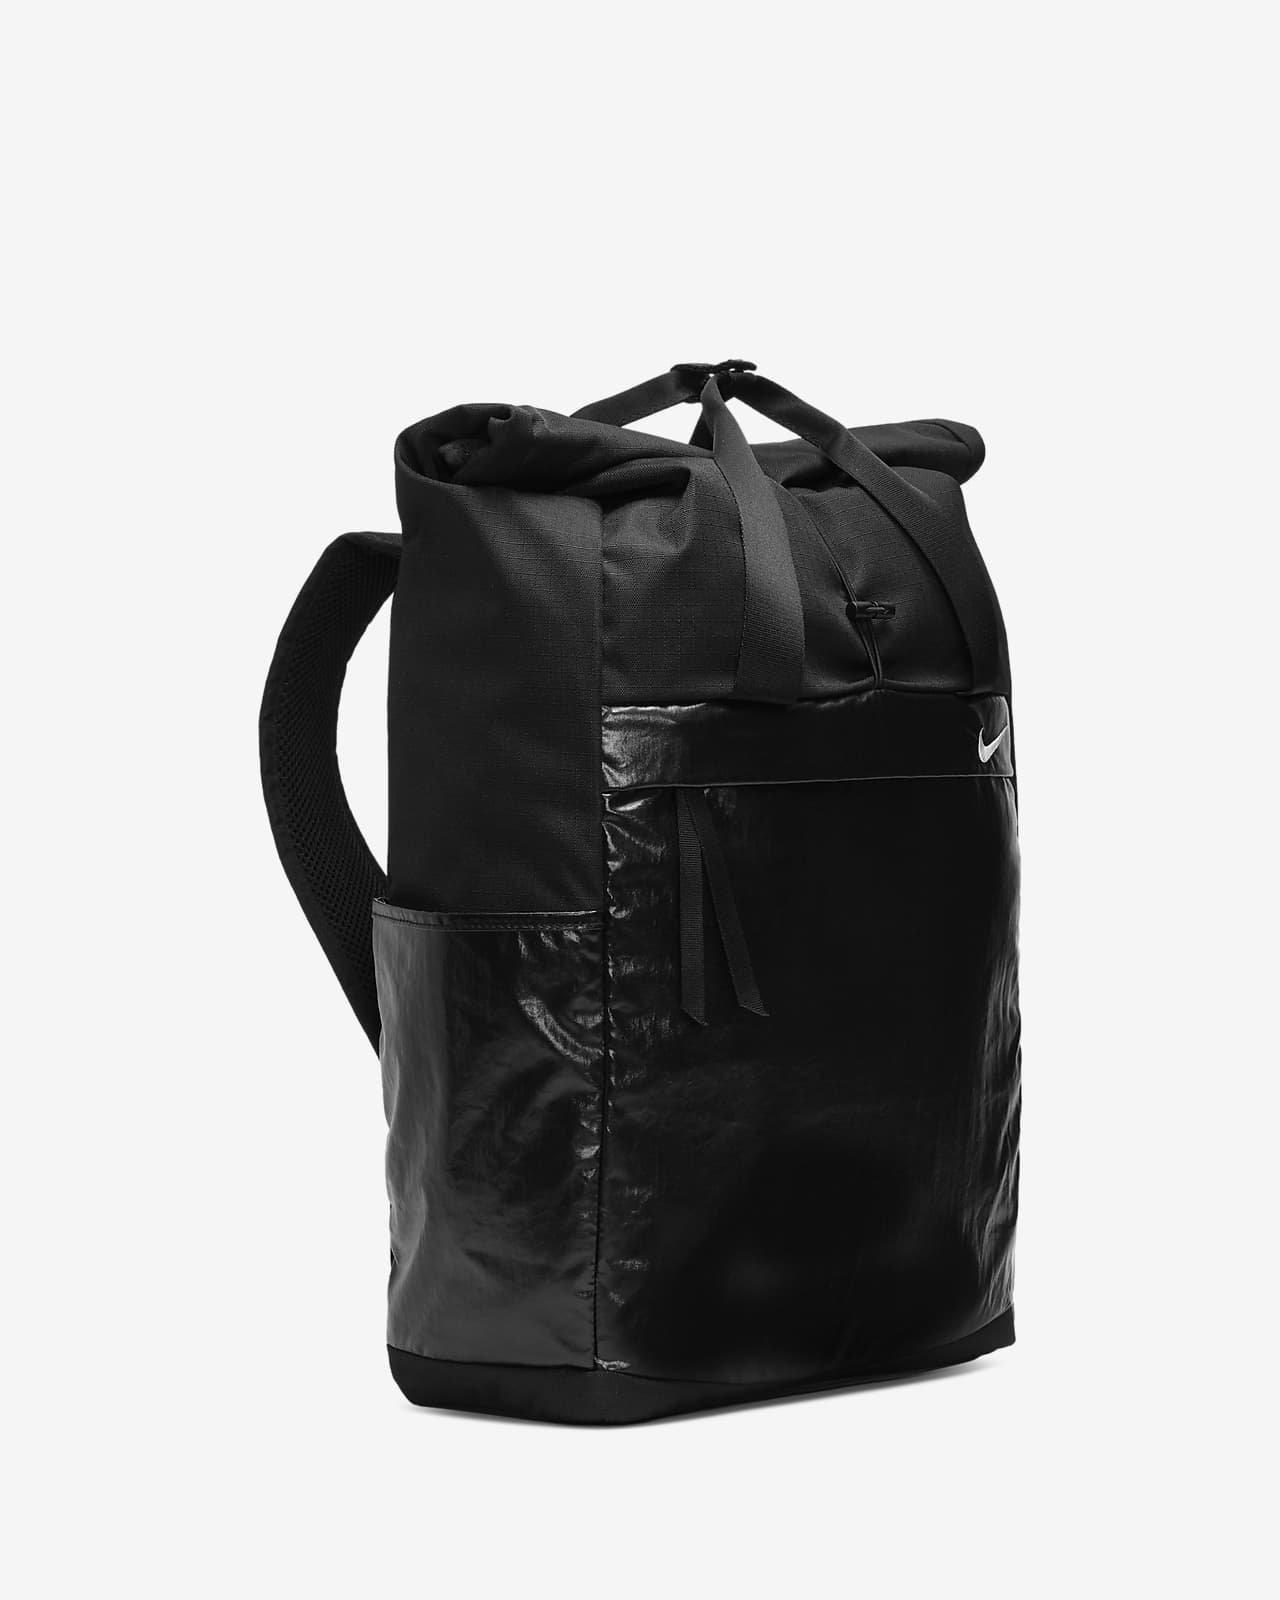 nike black backpack women's